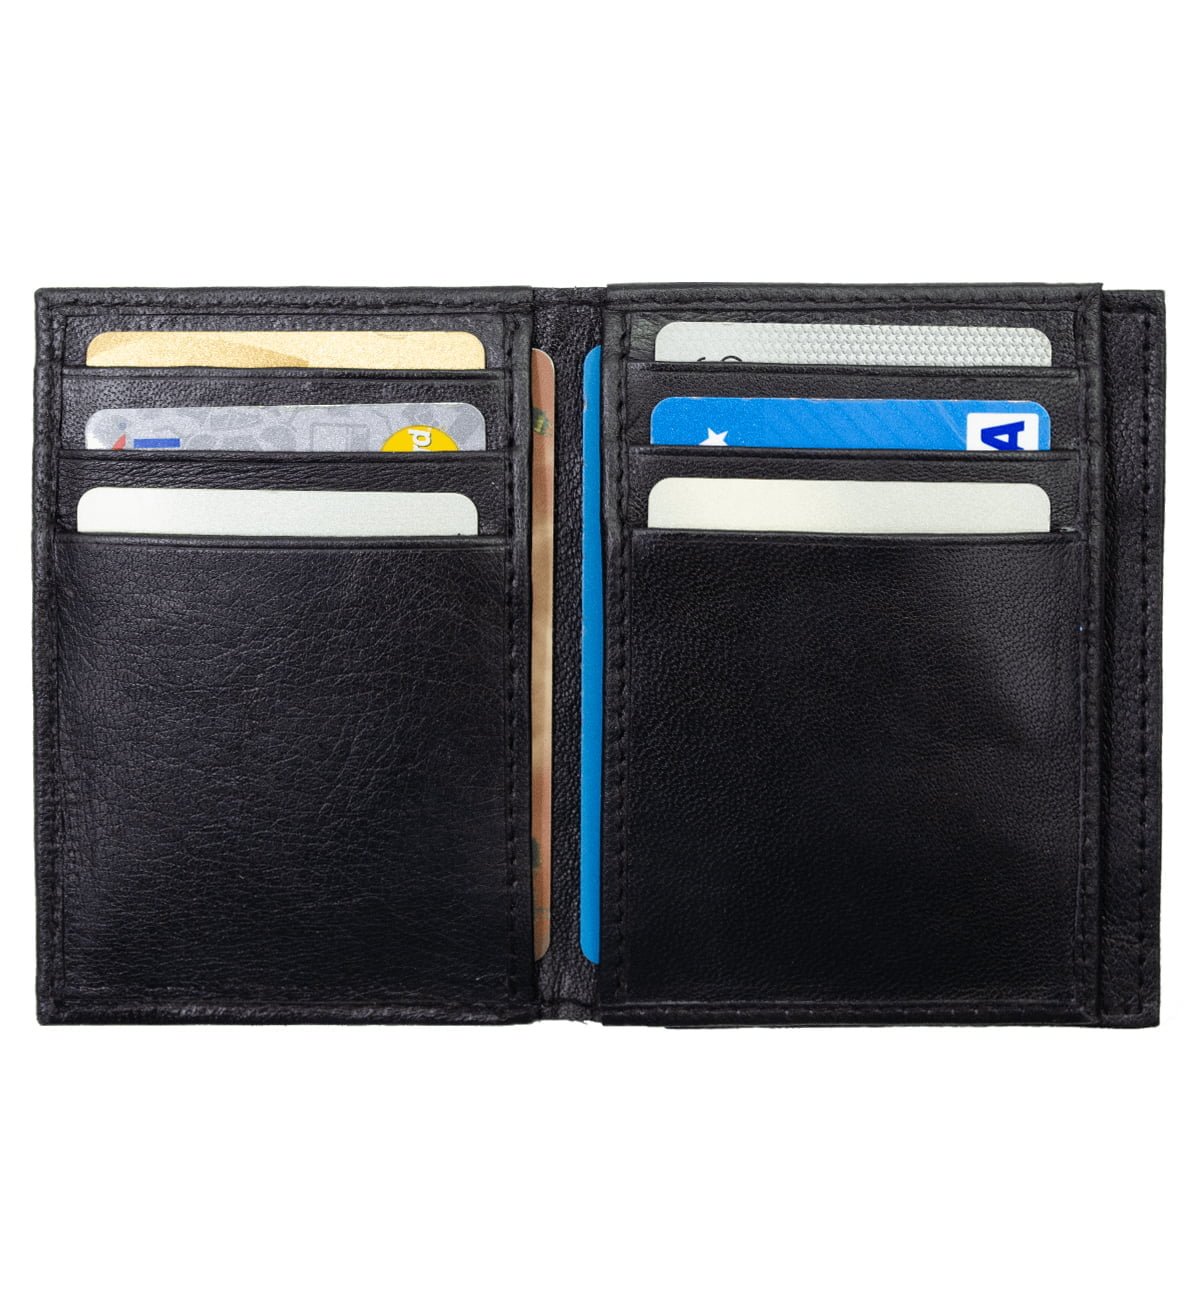 Foldable Credit Card Holder with ID Window, RFID Blocking - #CC-18 RF